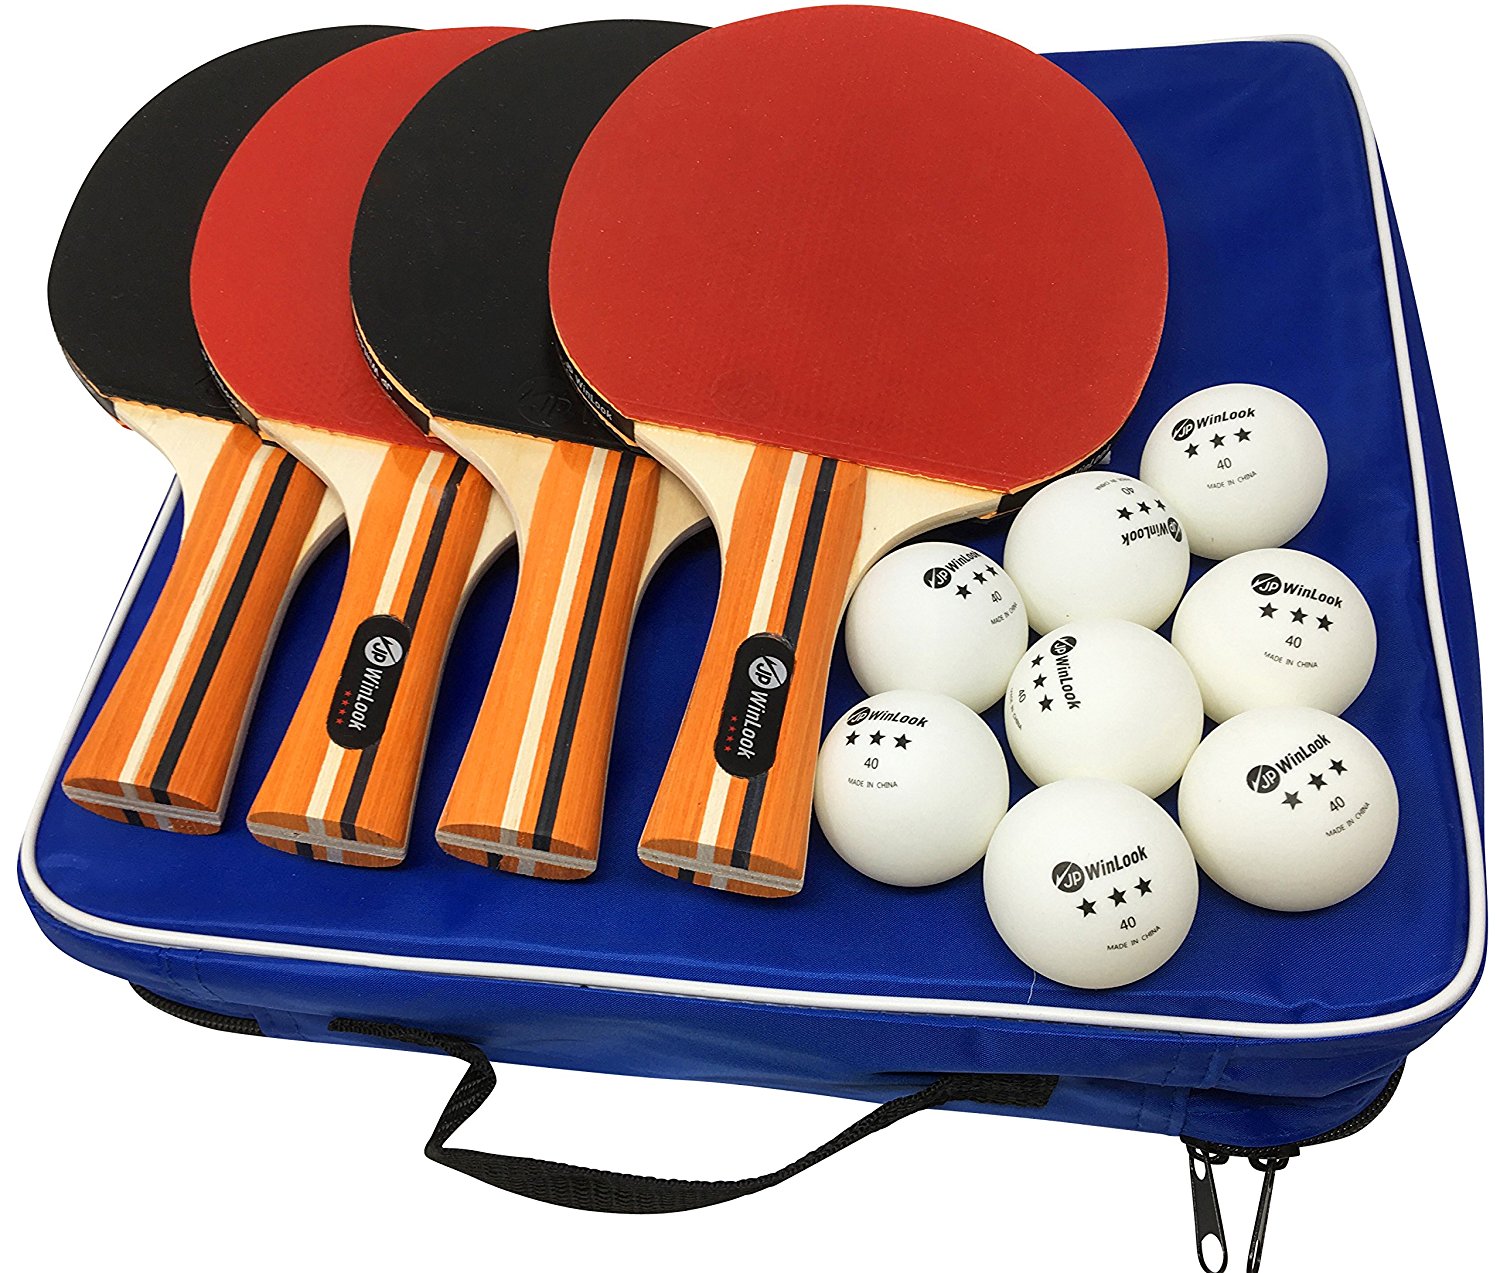 2-tennis racquets table tennis balls set c3 Senston paddles ping pong 